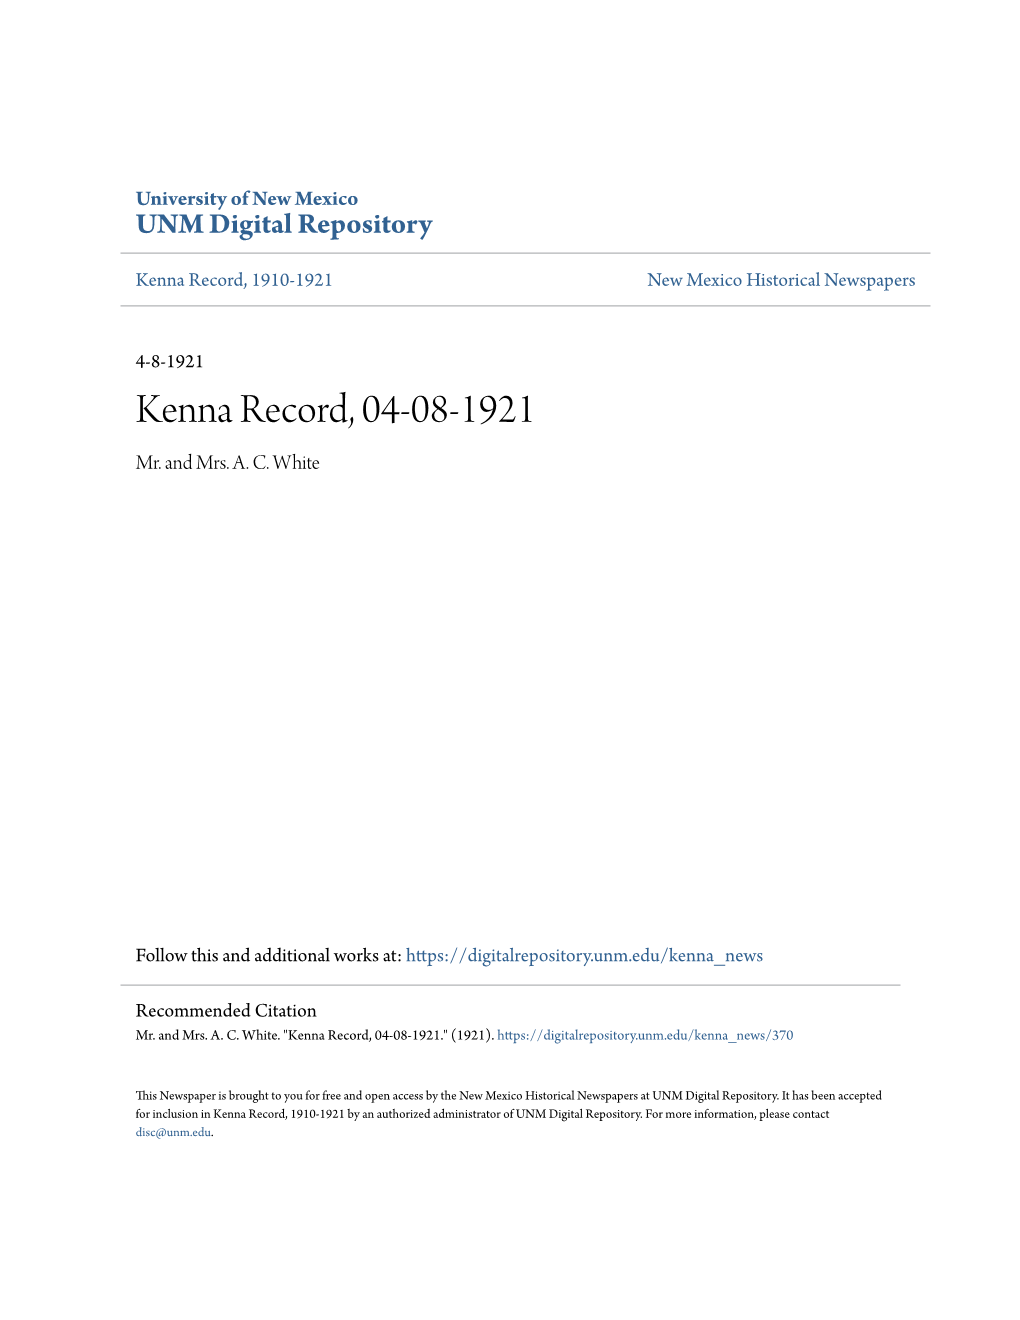 Kenna Record, 04-08-1921 Mr